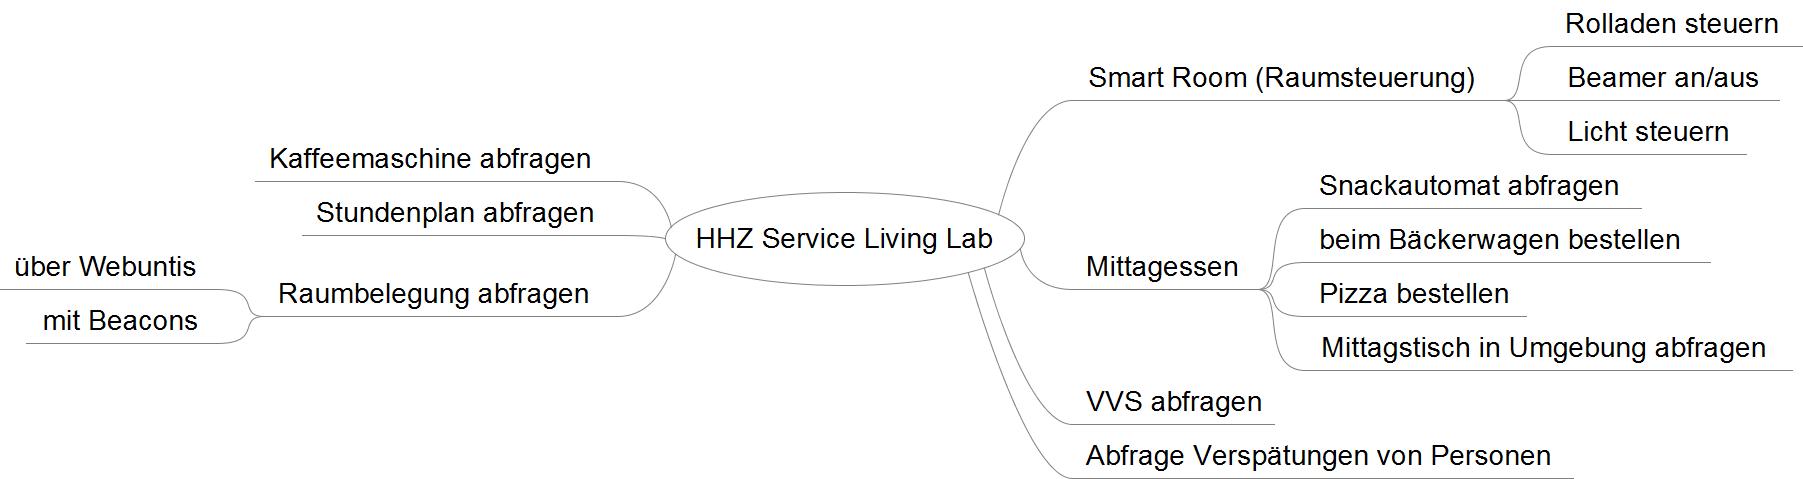 HHZ Service Living Lab_Brainstorming_V4.jpeg